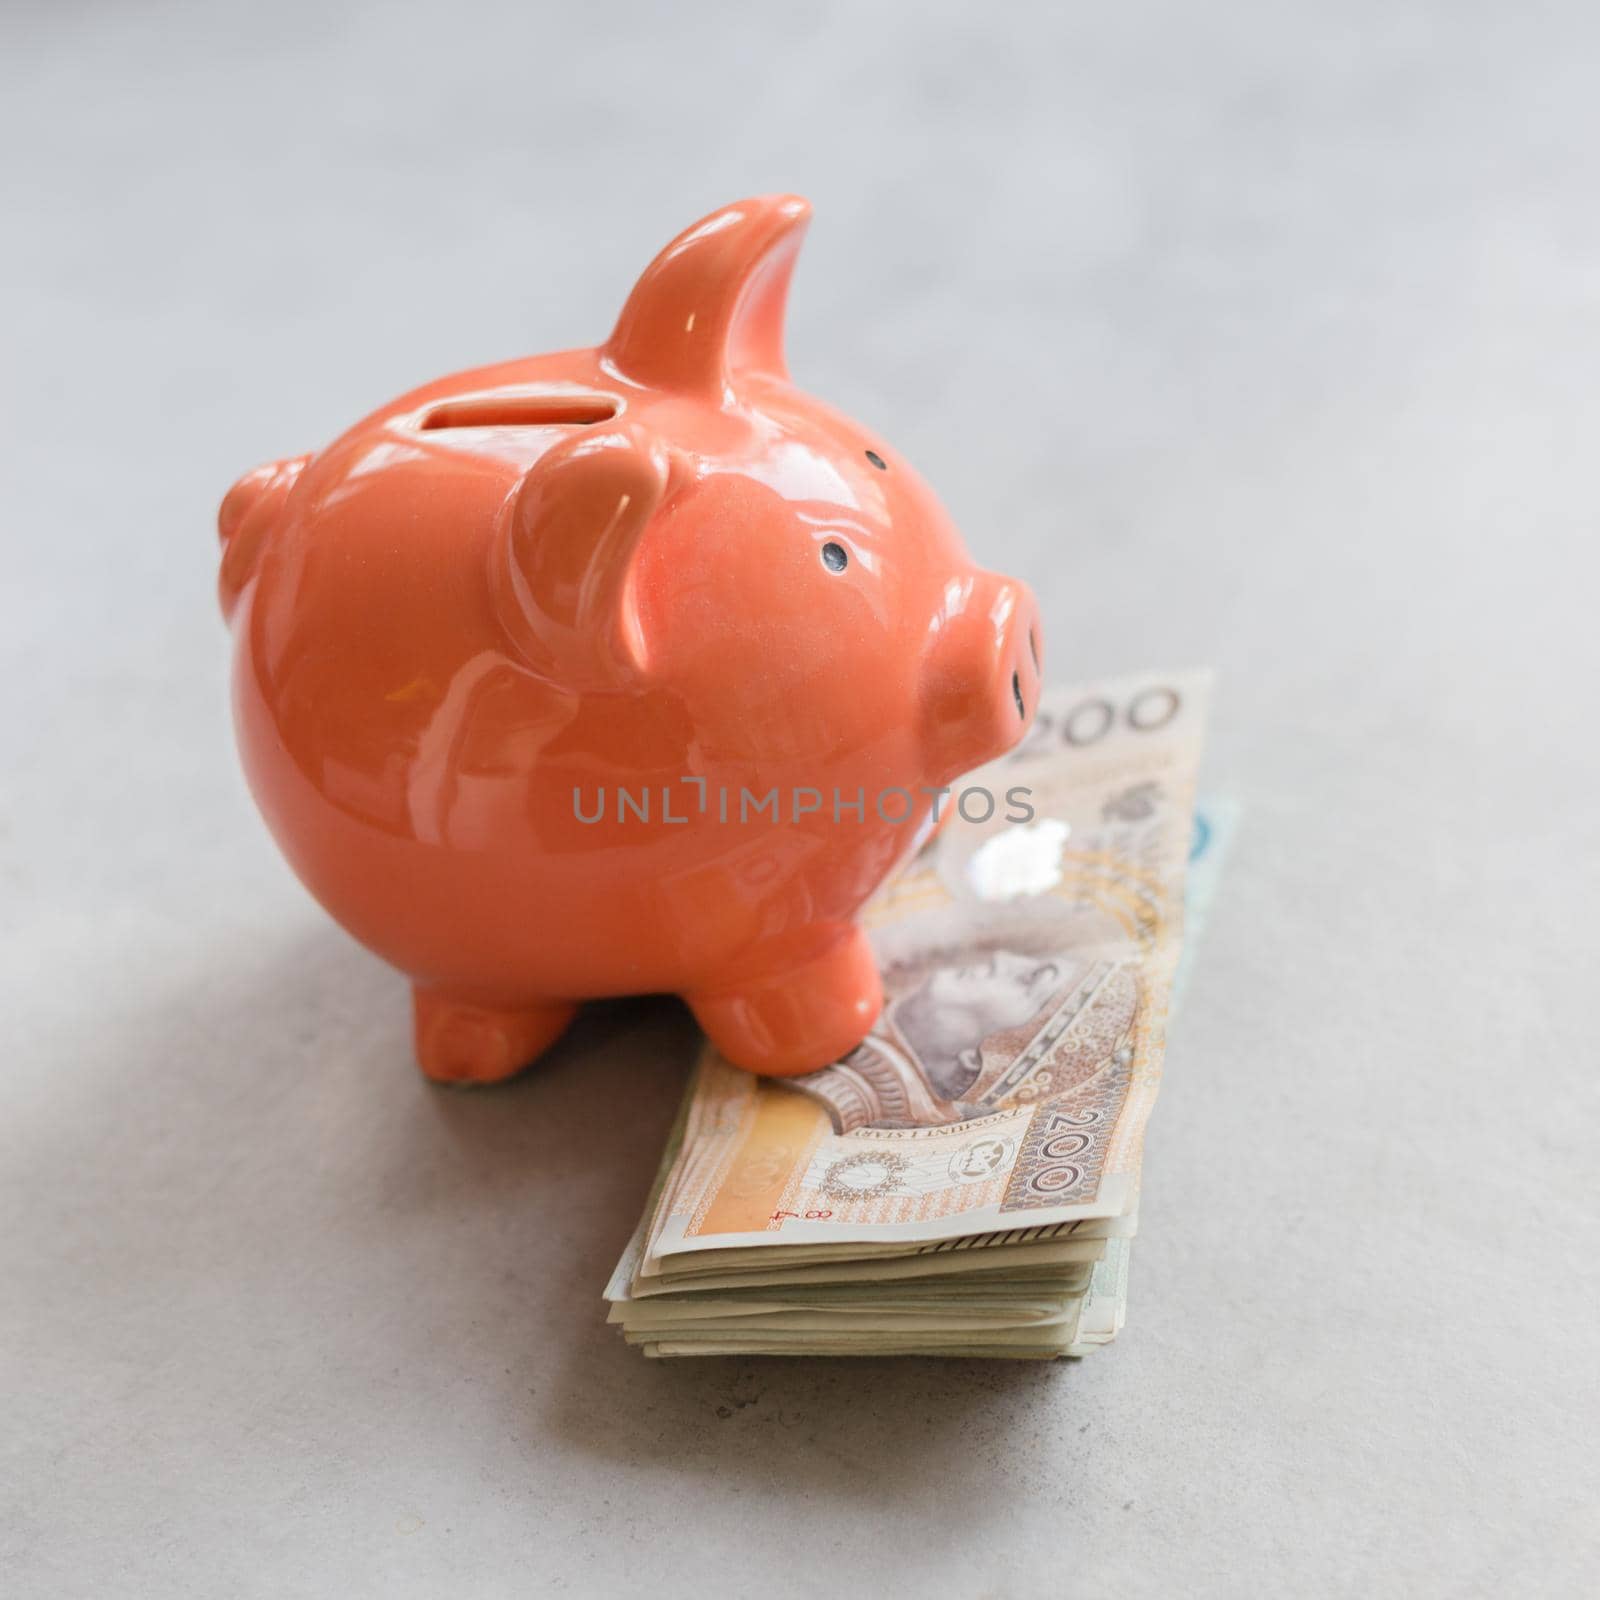 Piggy bank with polish money on concrete table - saving profit concept by ingalinder